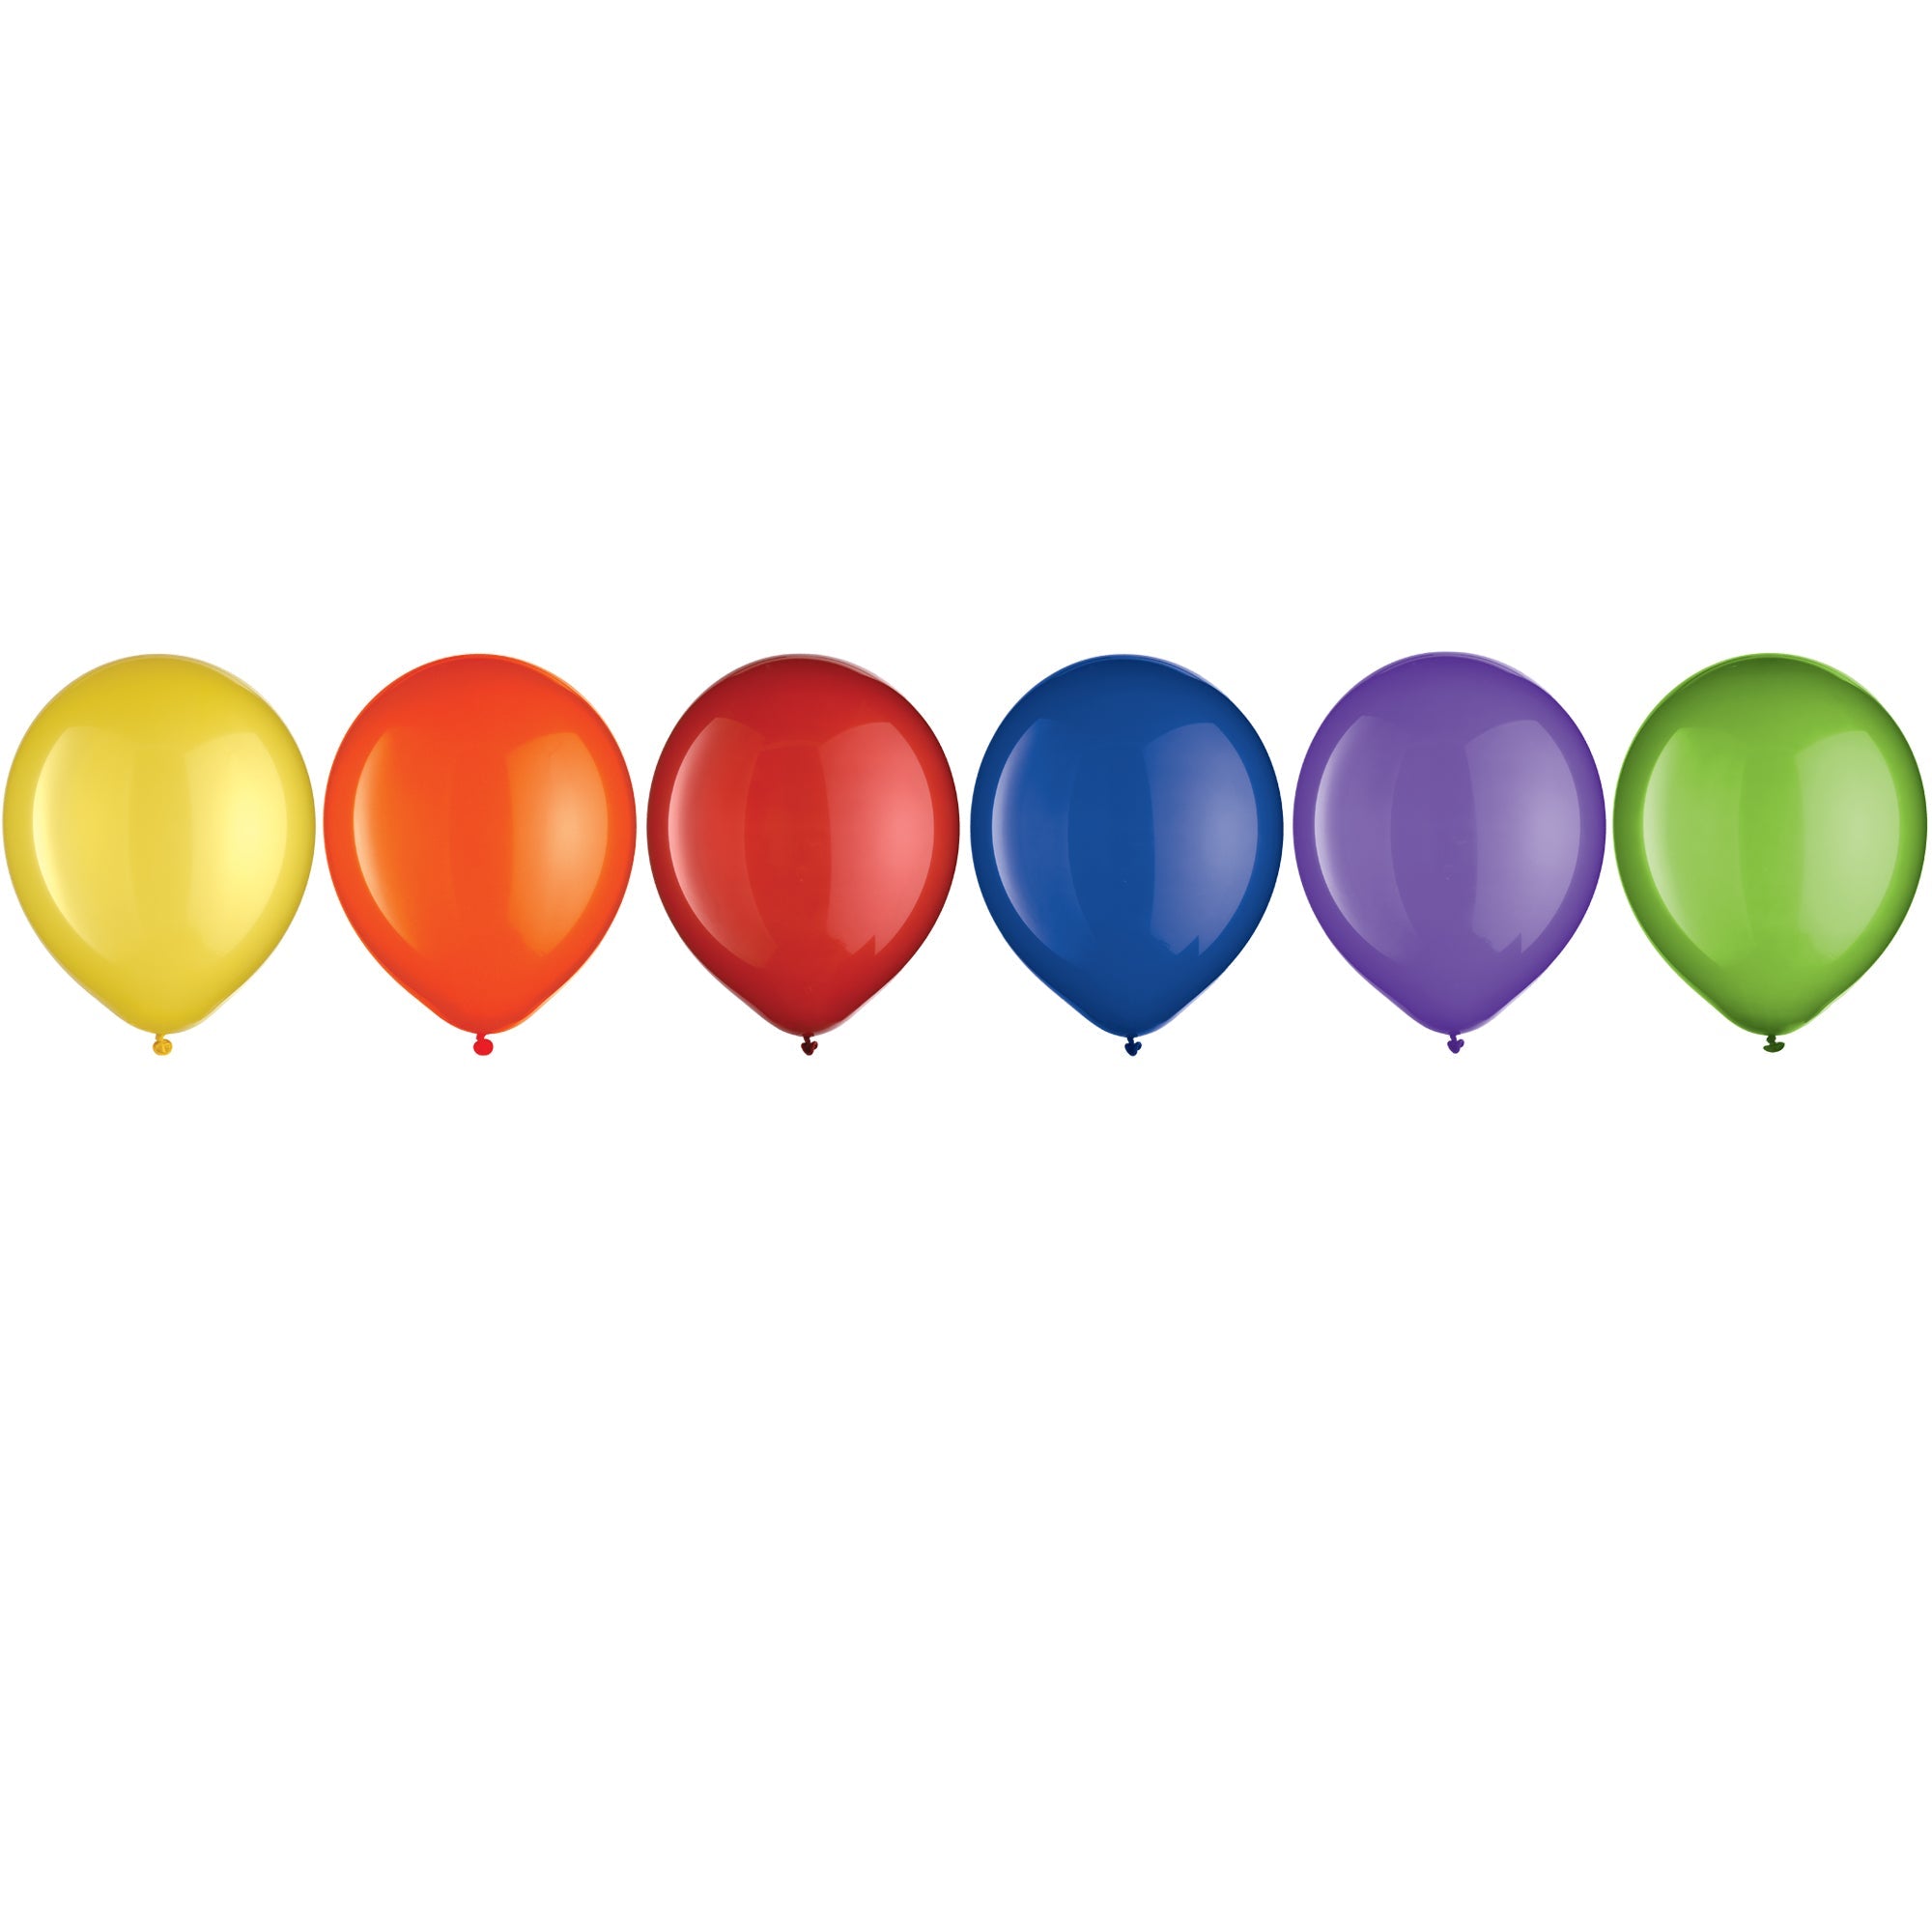 Funny Fashion - Balloons Balloon-Accessory-Net Drop-500 Balloons